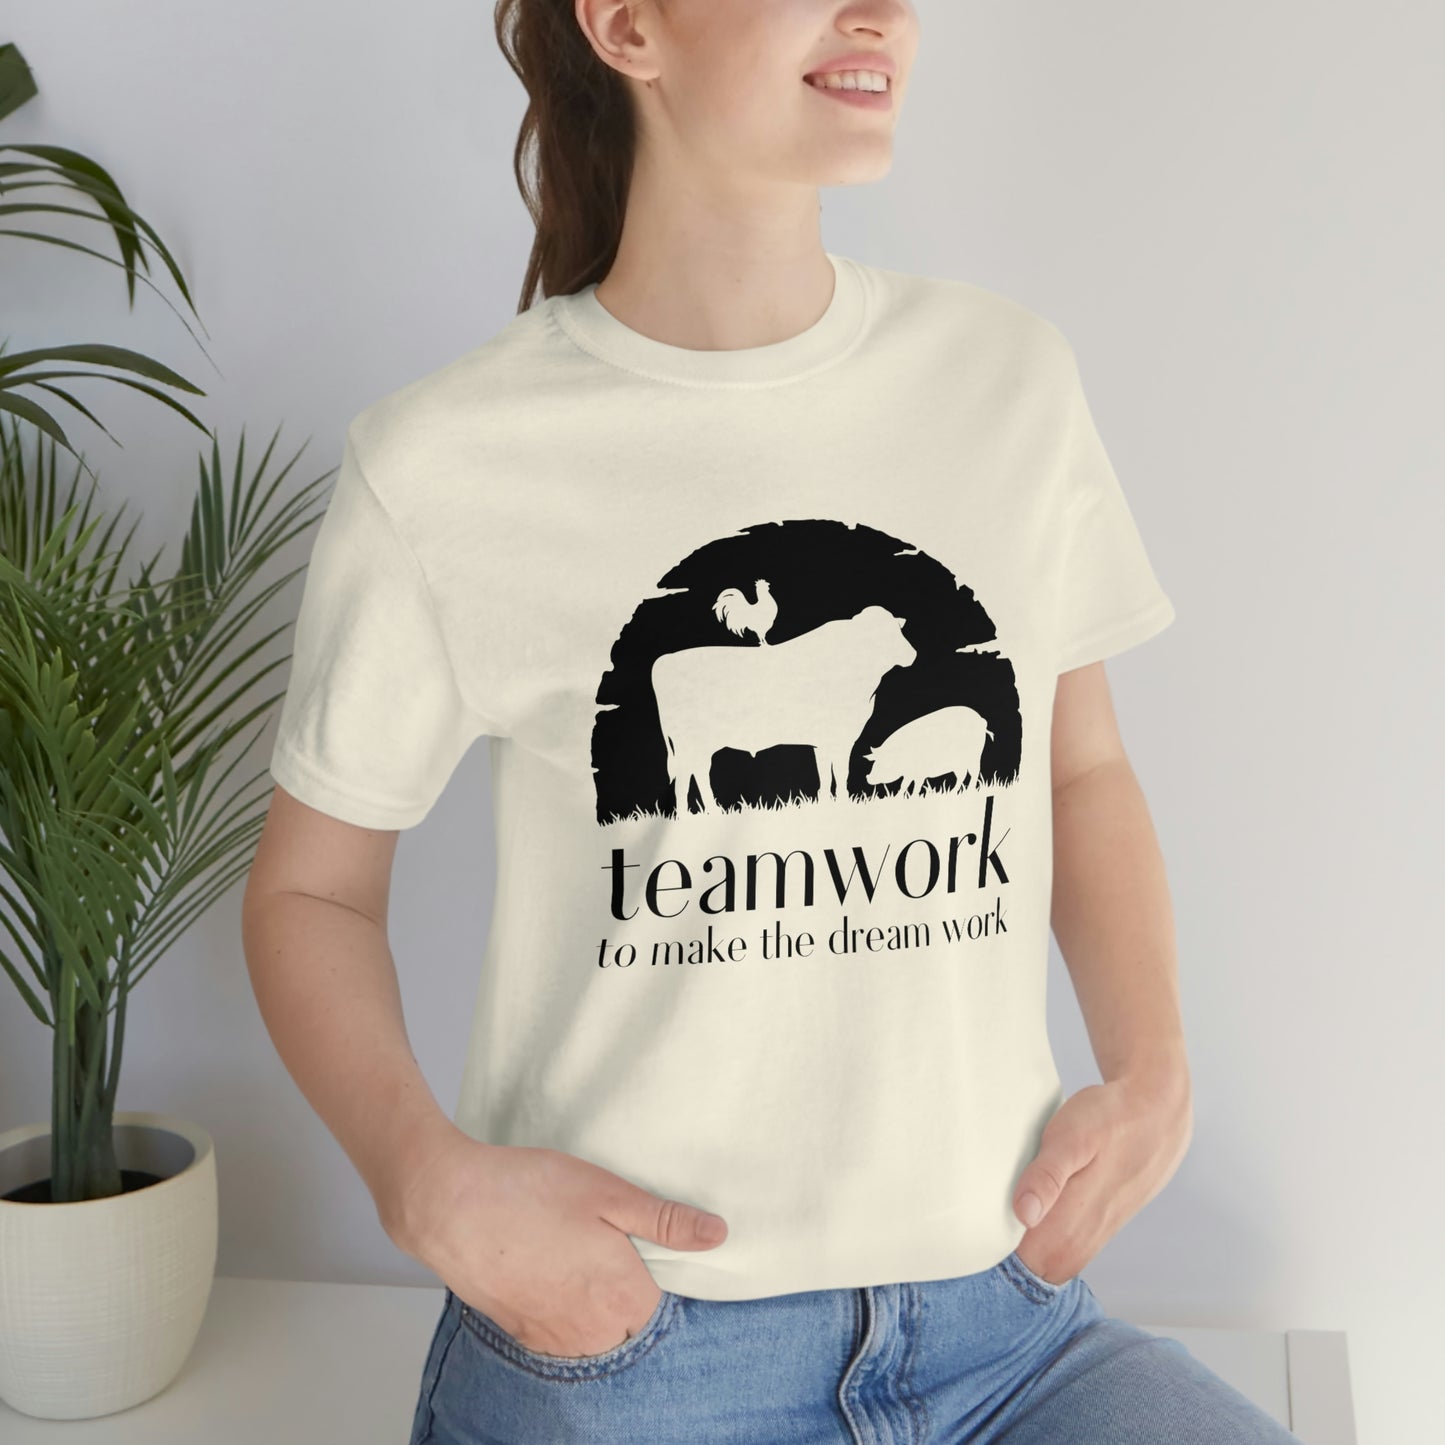 Teamwork to Make the Dream Work T-Shirt │Made in USA │Unisex - Men and Women's Cotton Tee │Farm Animals Sunset Moon